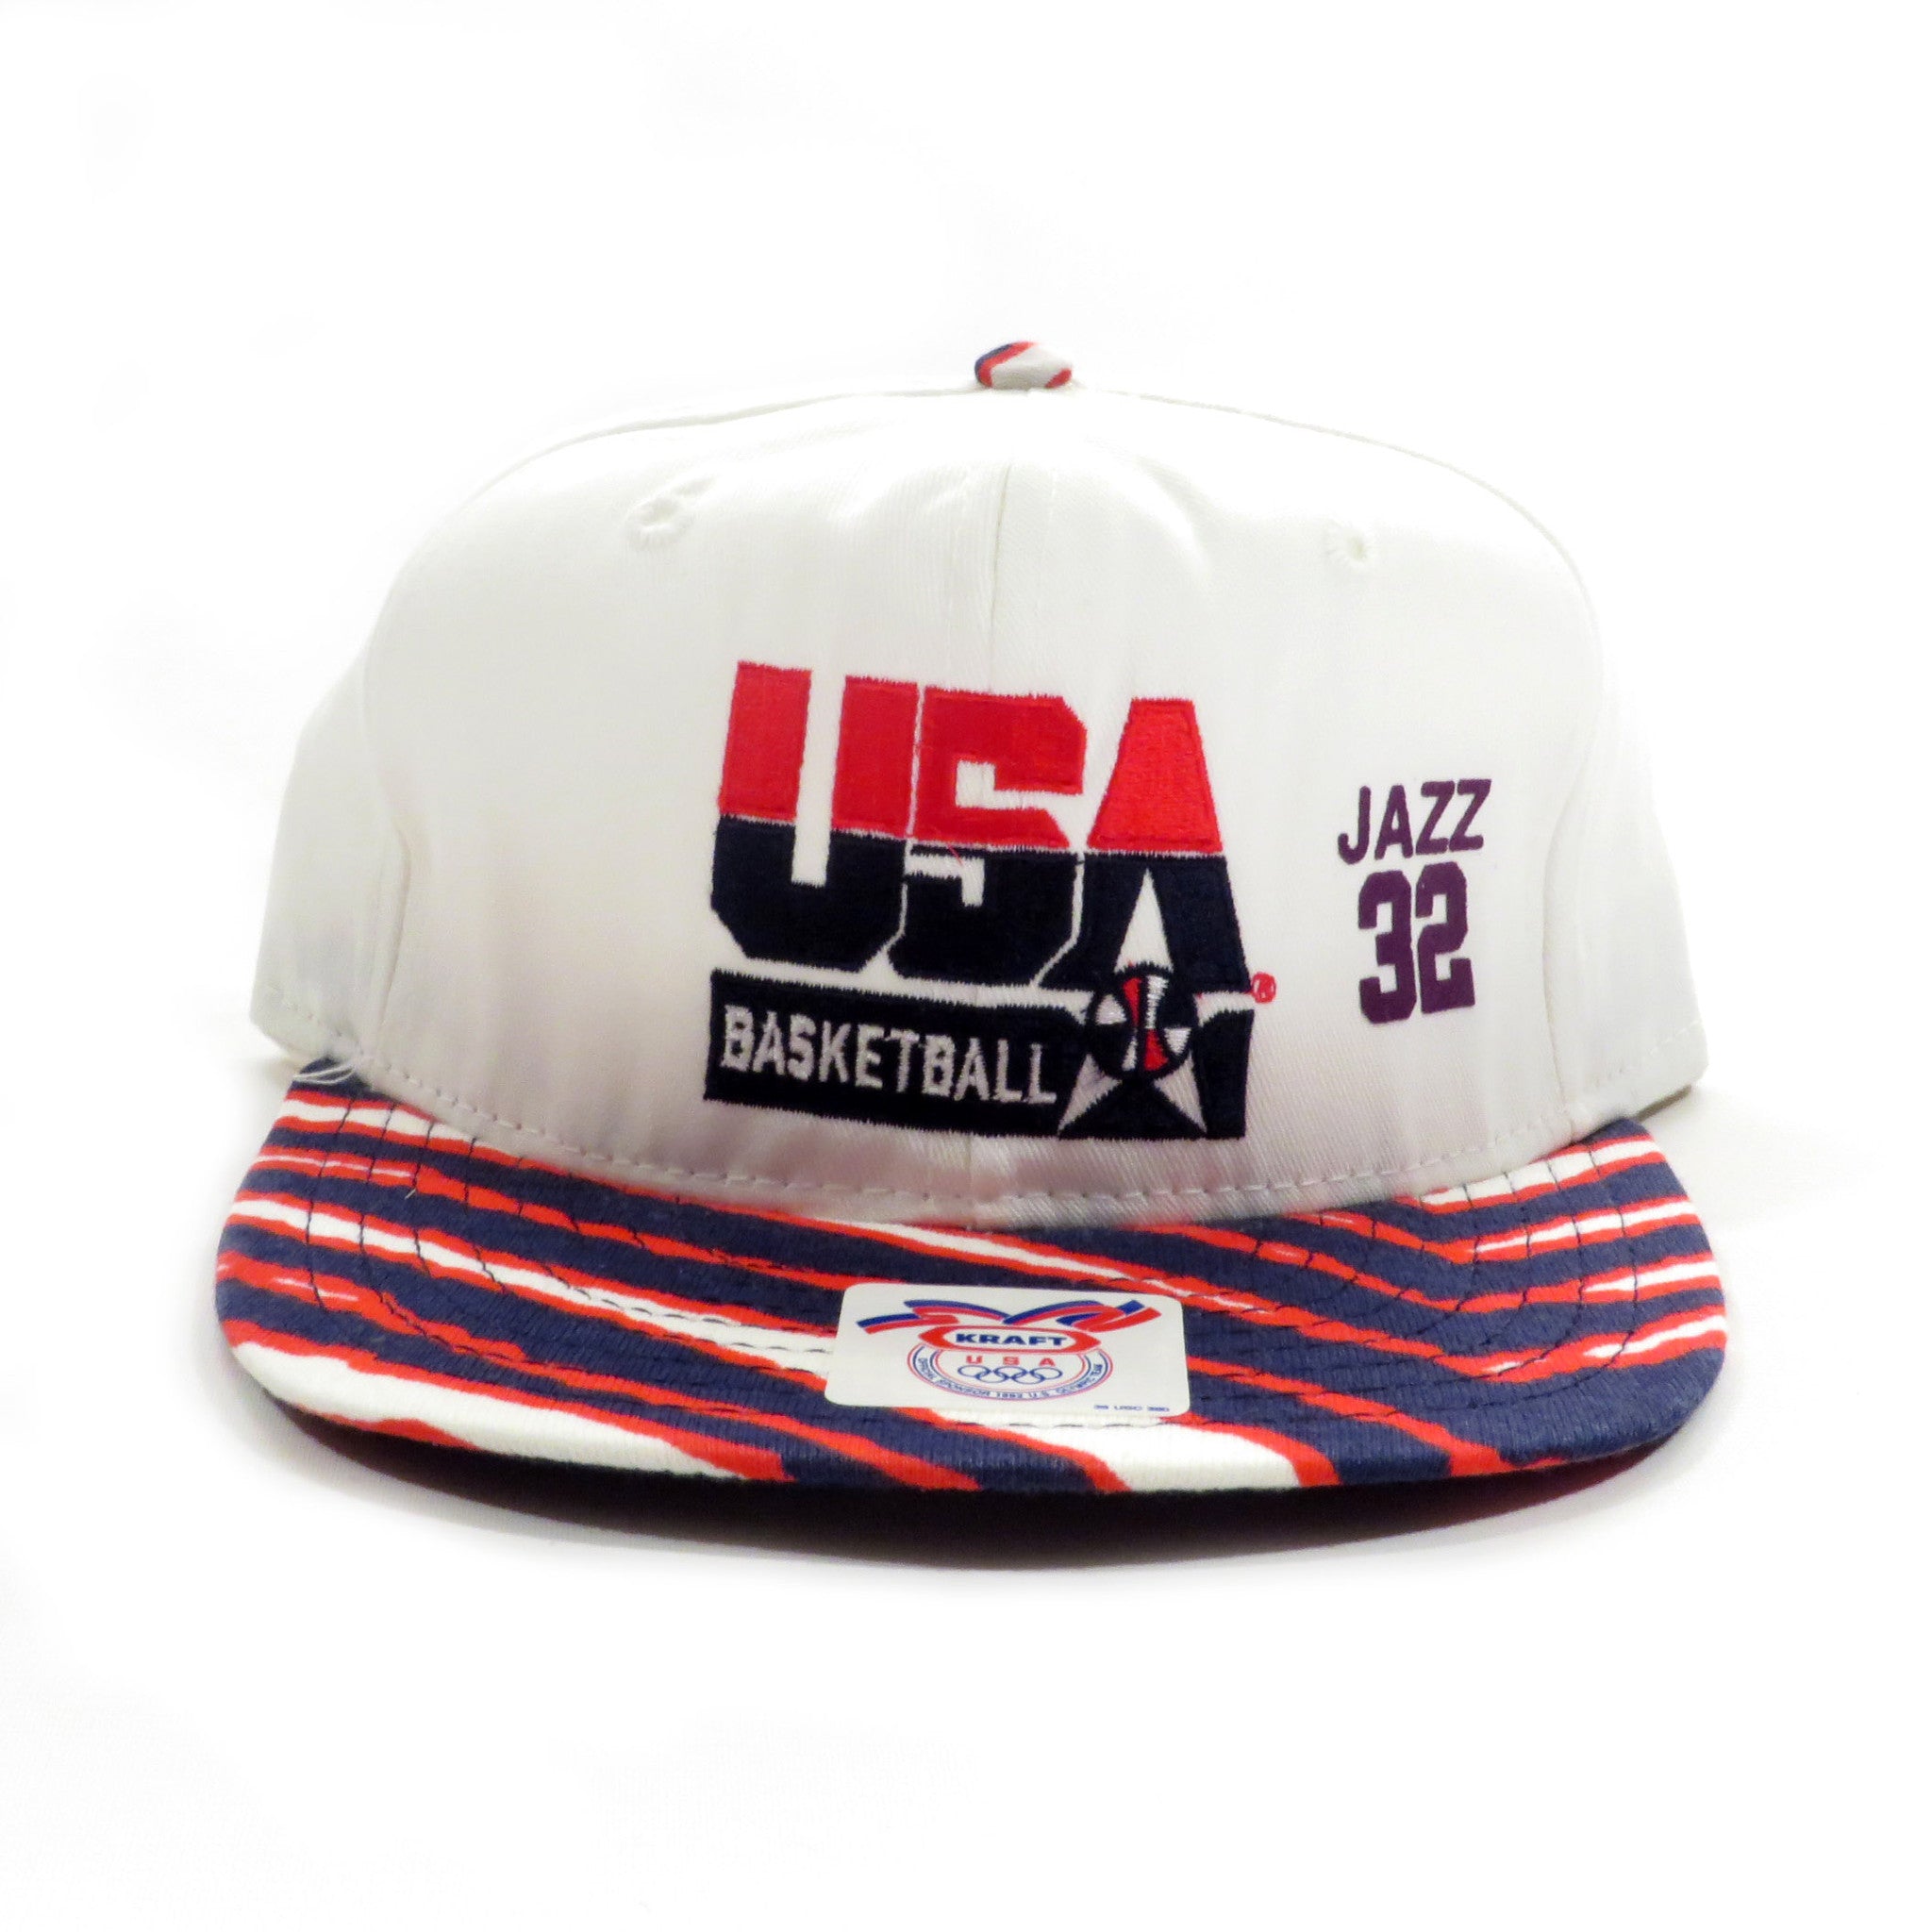 USA Basketball Malone 32 Jazz Zubaz Snapback Hat